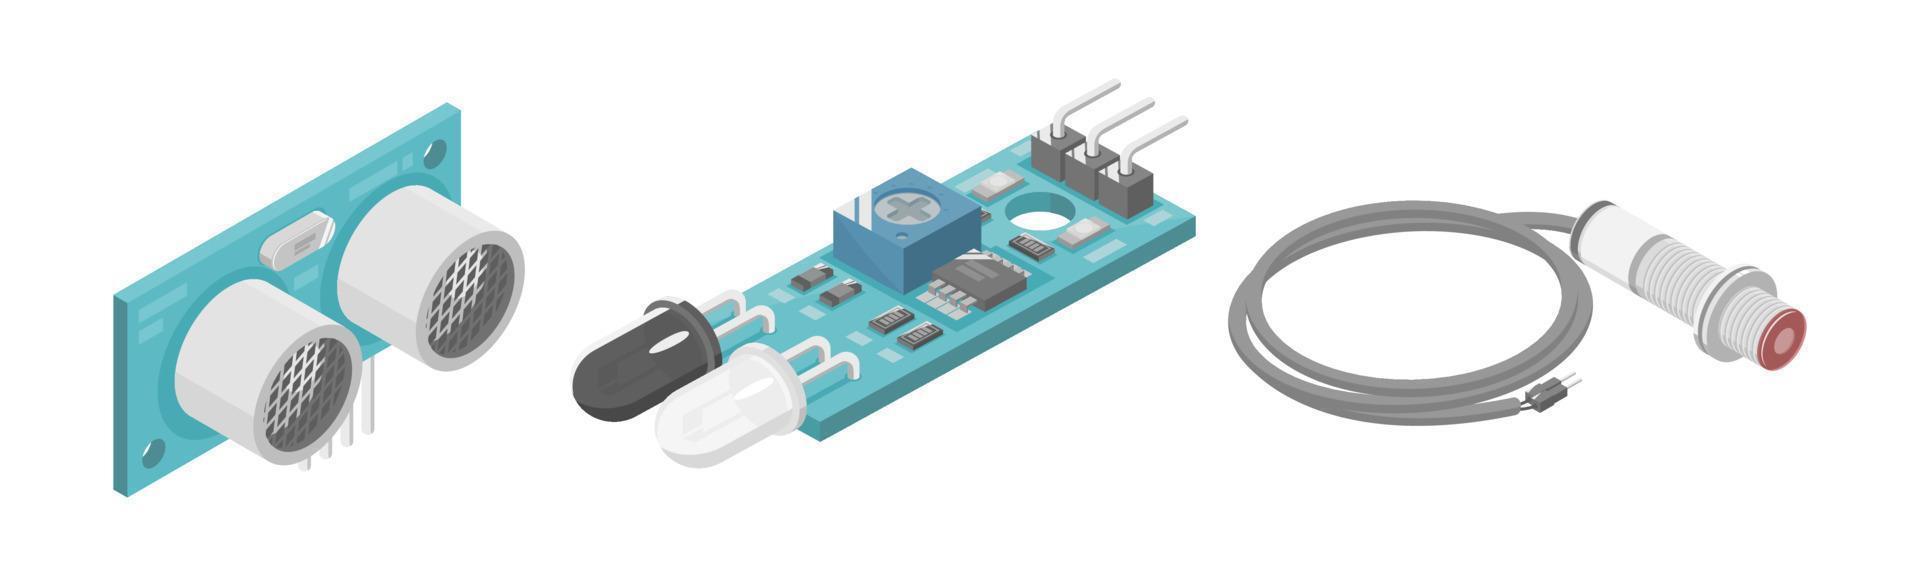 arduino ultrasónico ir infrarrojo módulo sensor microcontrolador interfaz plc componente industrial isométrico dibujos animados vector